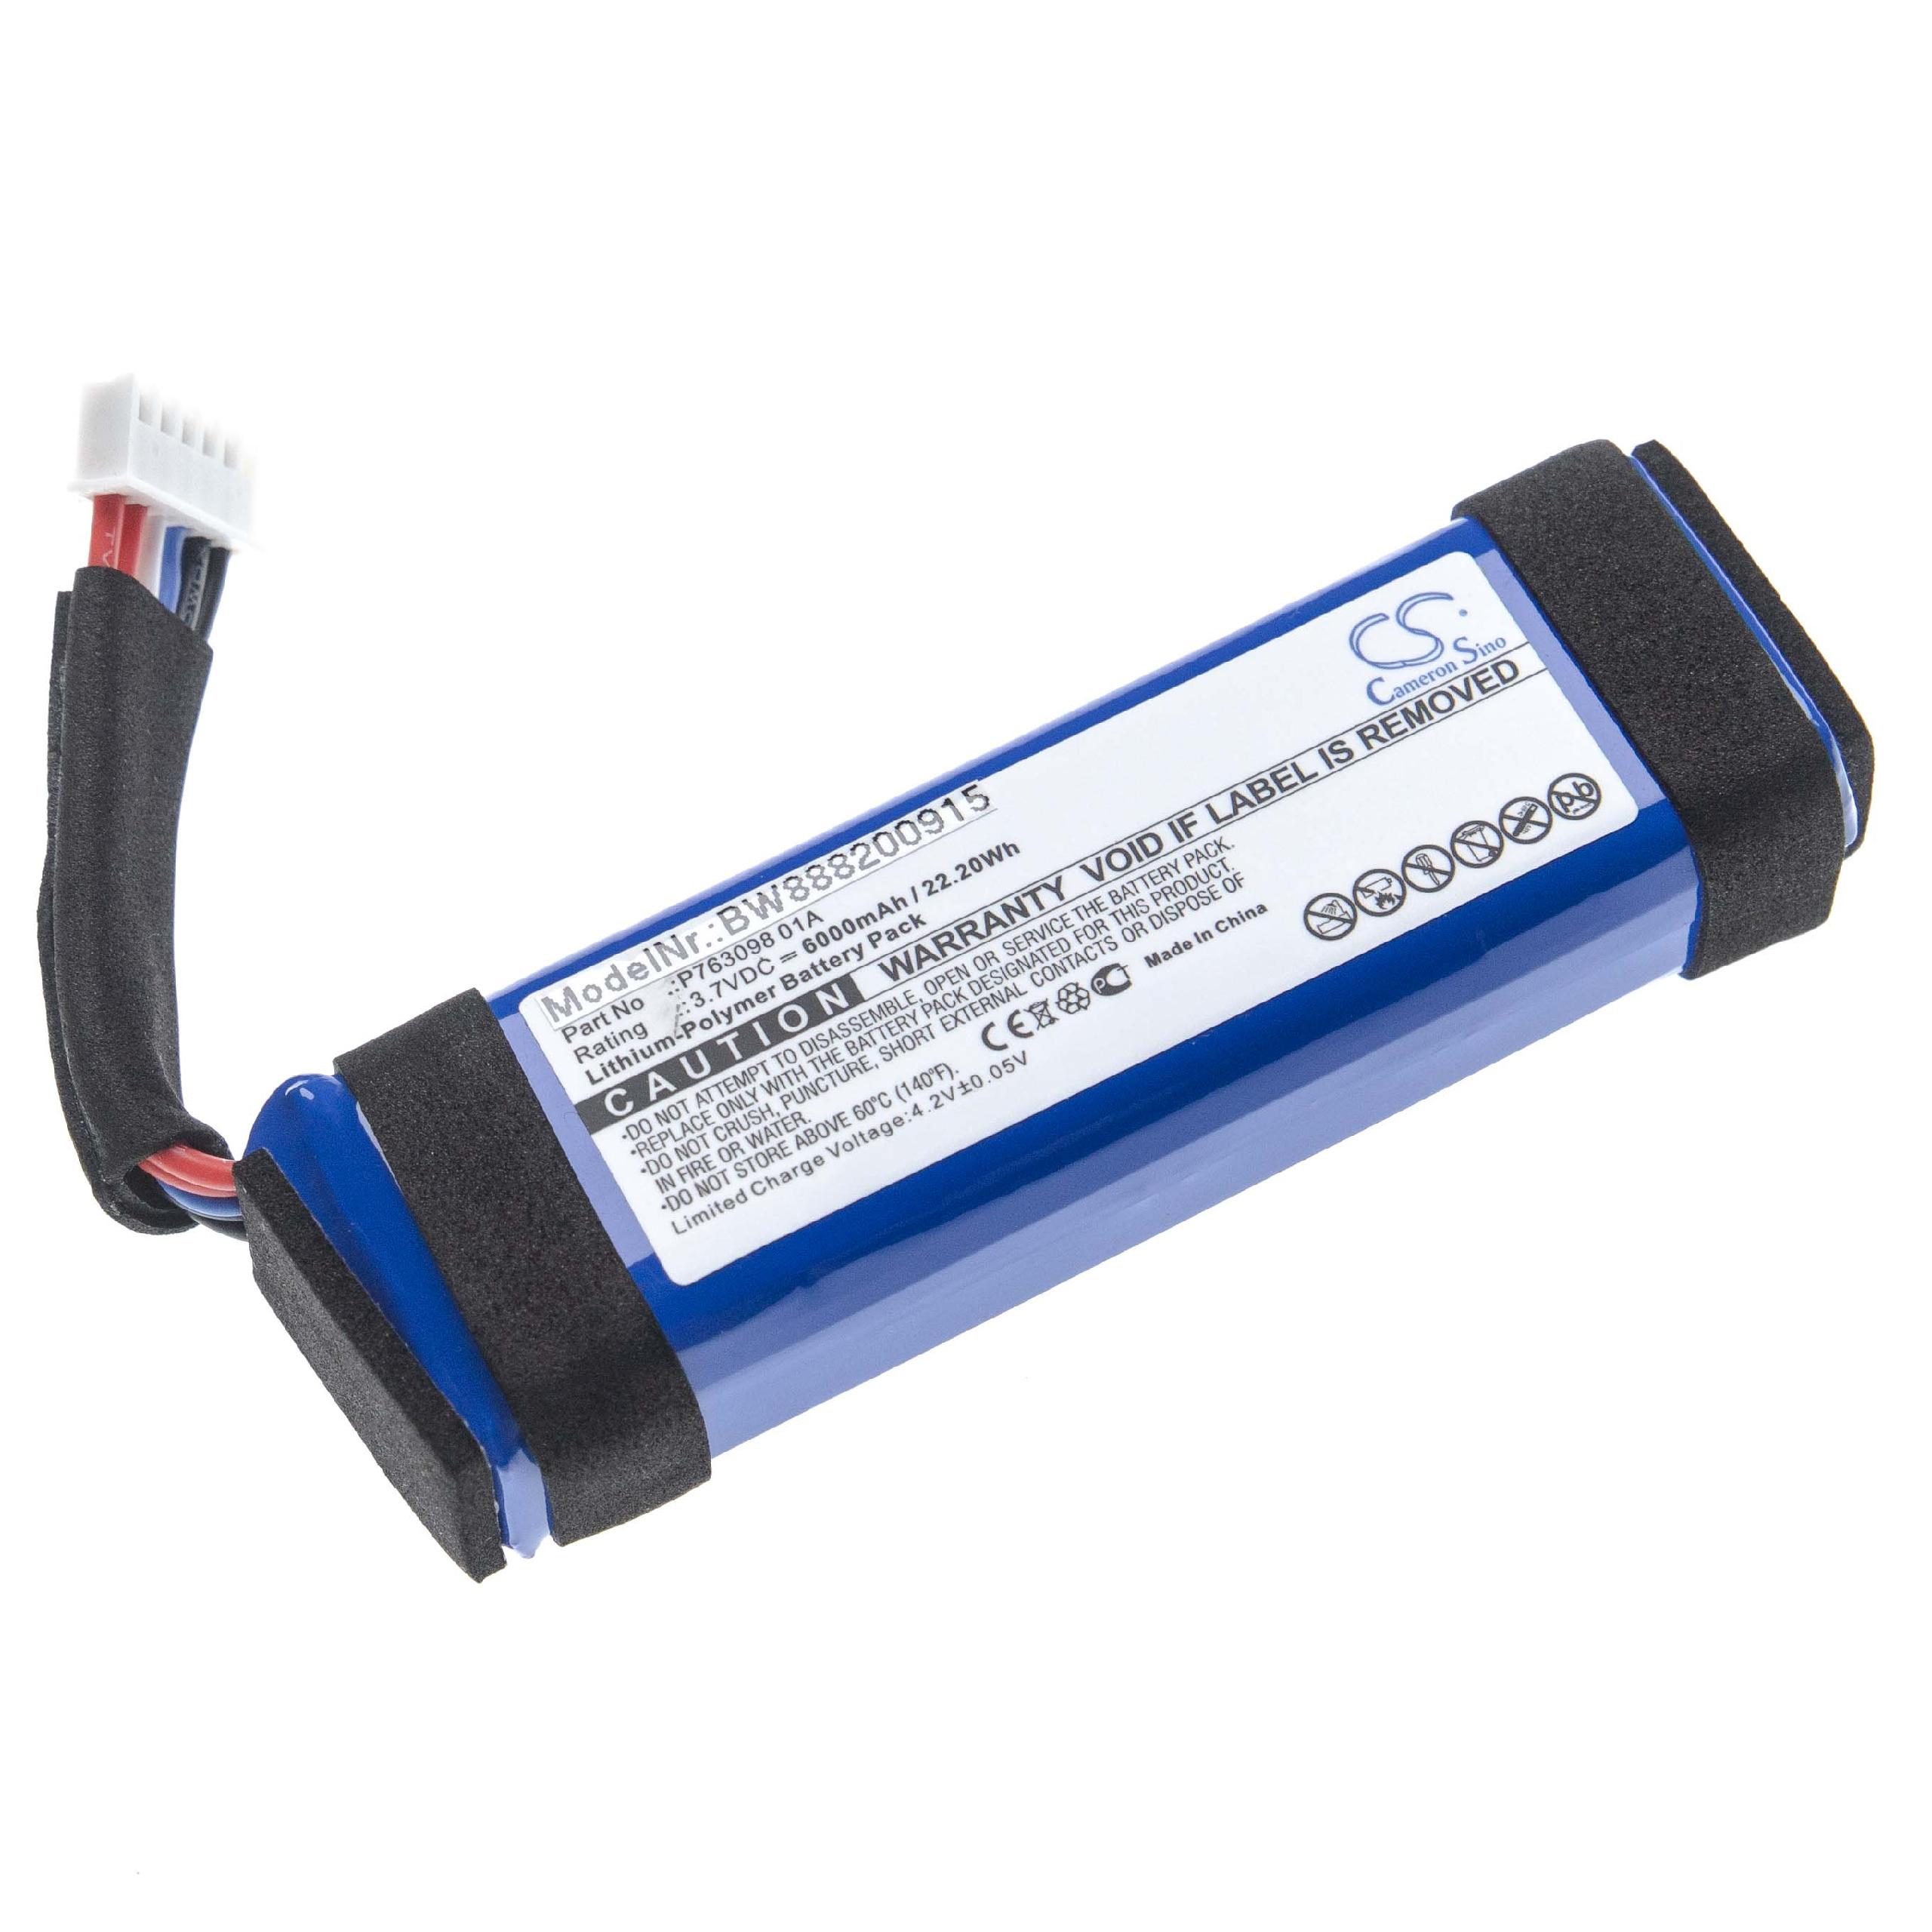  Battery replaces JBL P763098 01A for JBLLoudspeaker - Li-polymer 6000 mAh